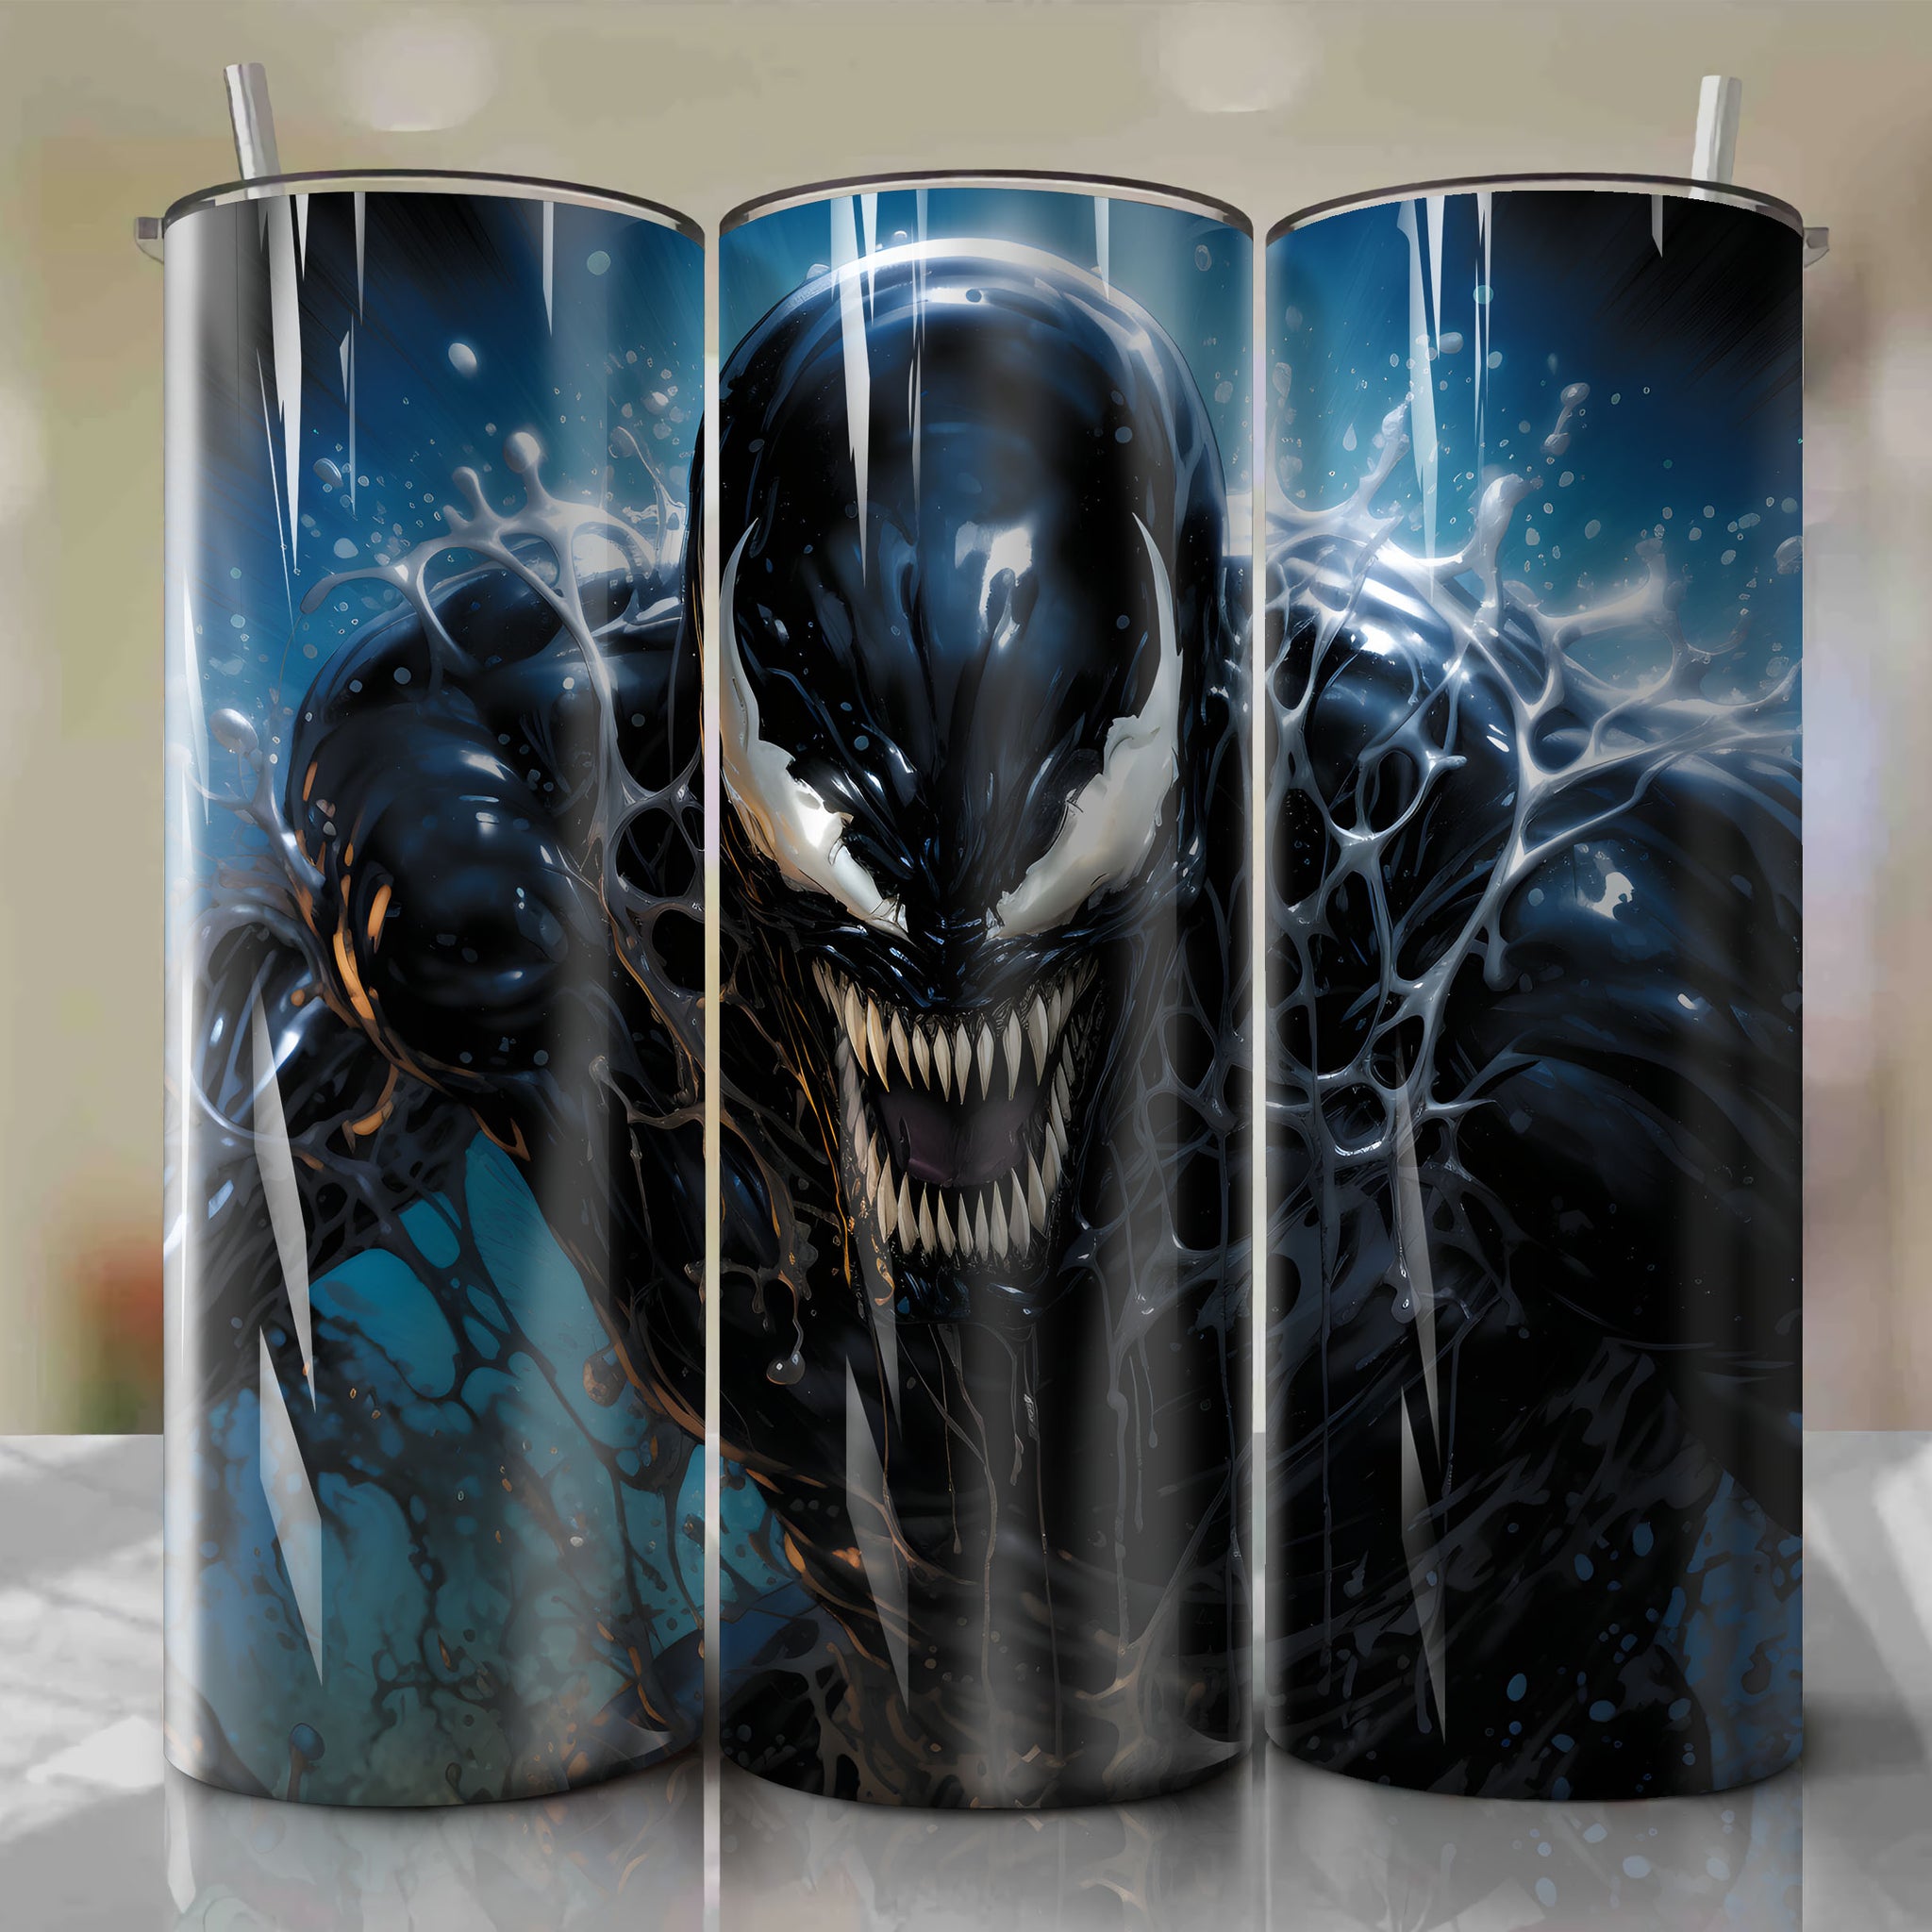 20 Oz Tumbler Wrap - A Dark and Primal Venom Artwork Collaboration
